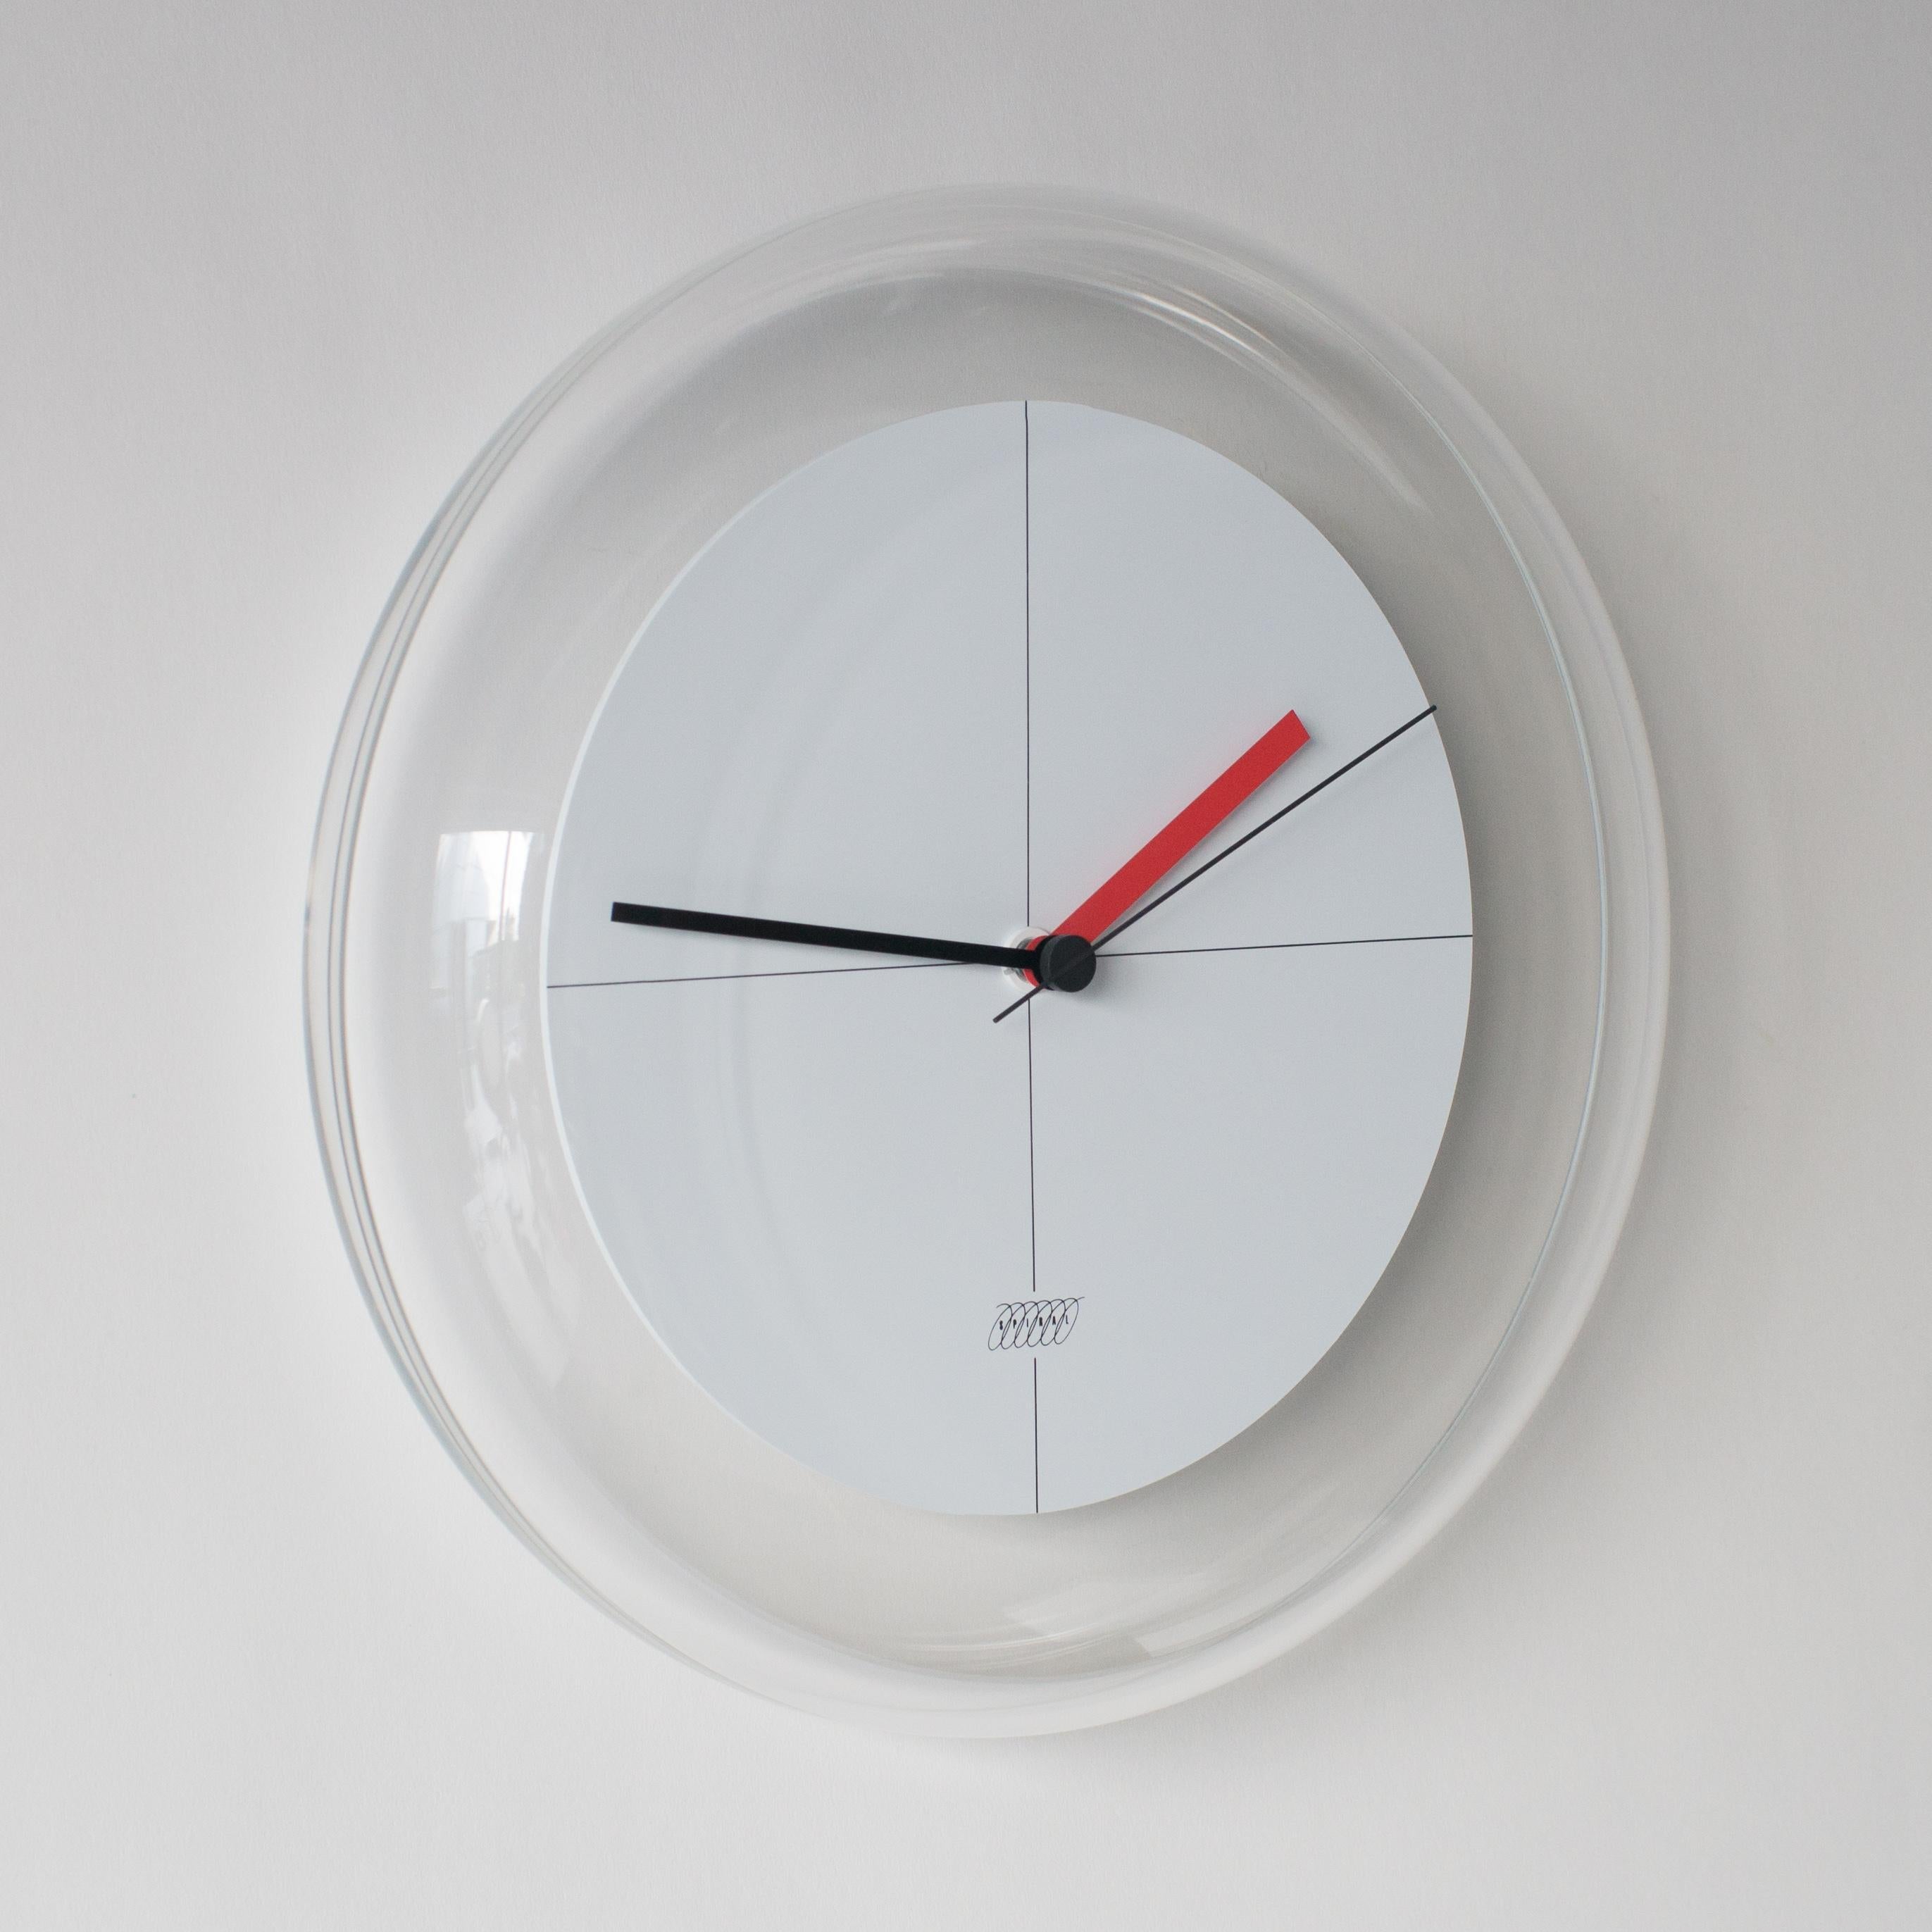 Spiral clock designed by Shiro Kuramata. Dial is inside acrylic edge rounded shade.
 